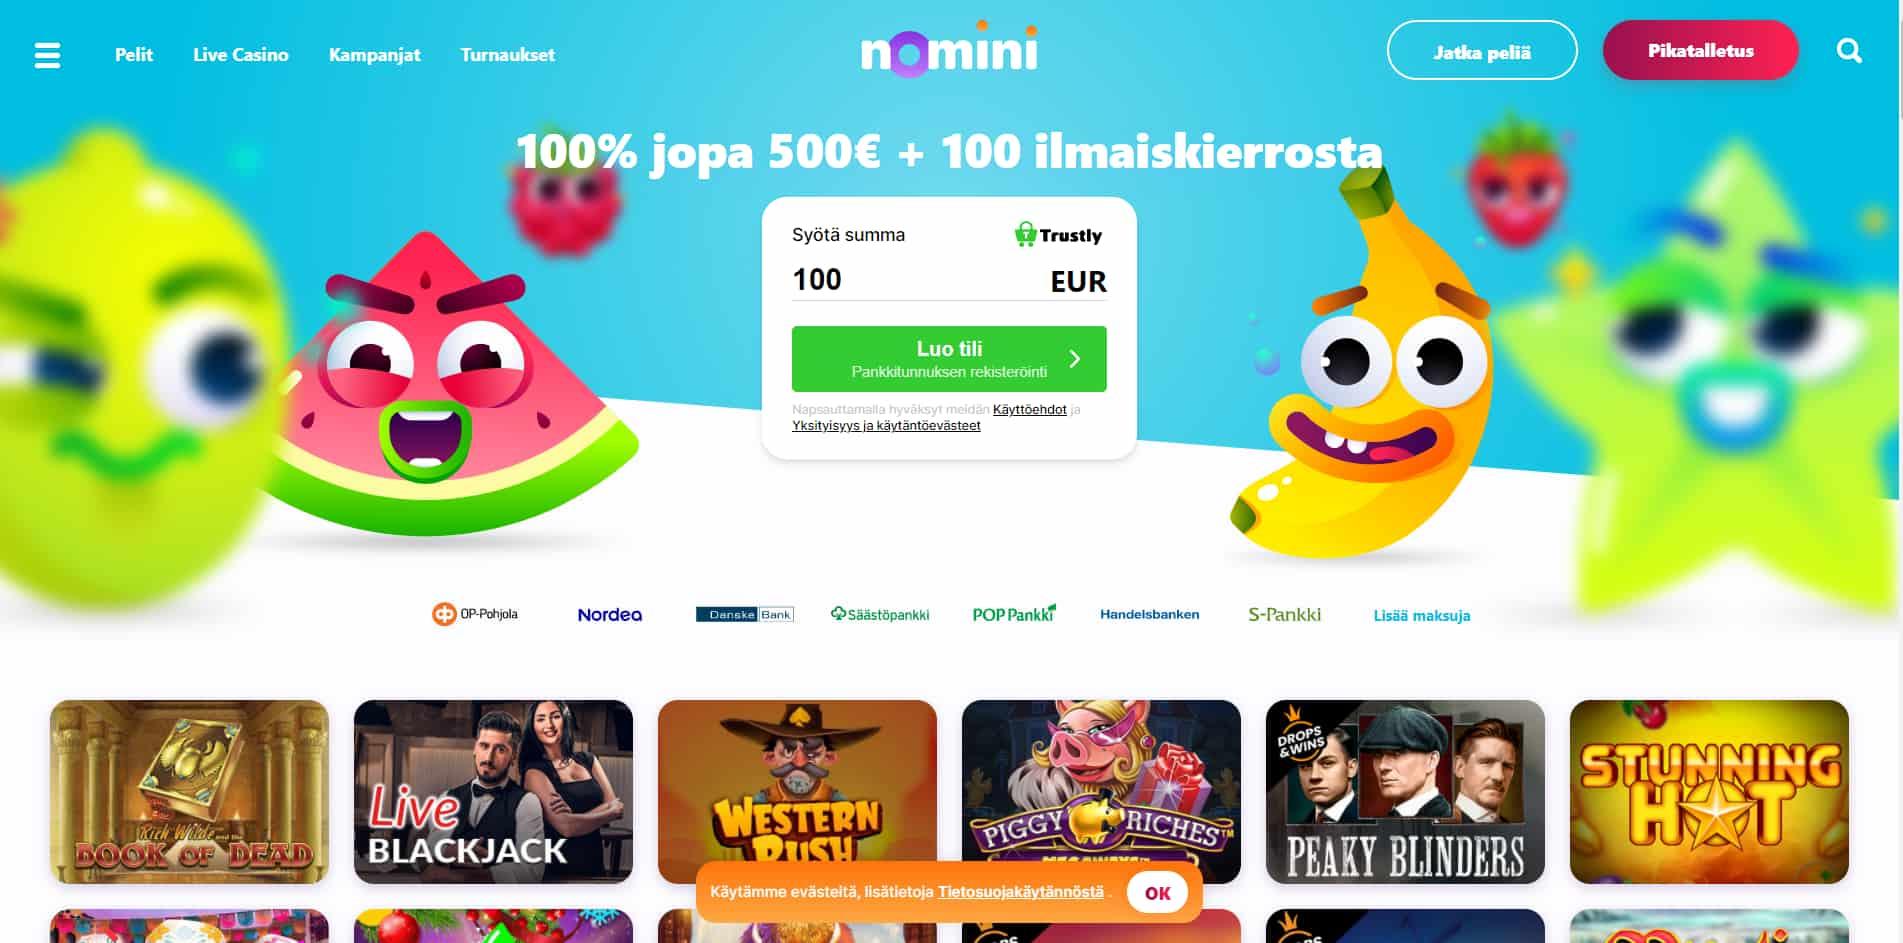 Nomini casino homepage